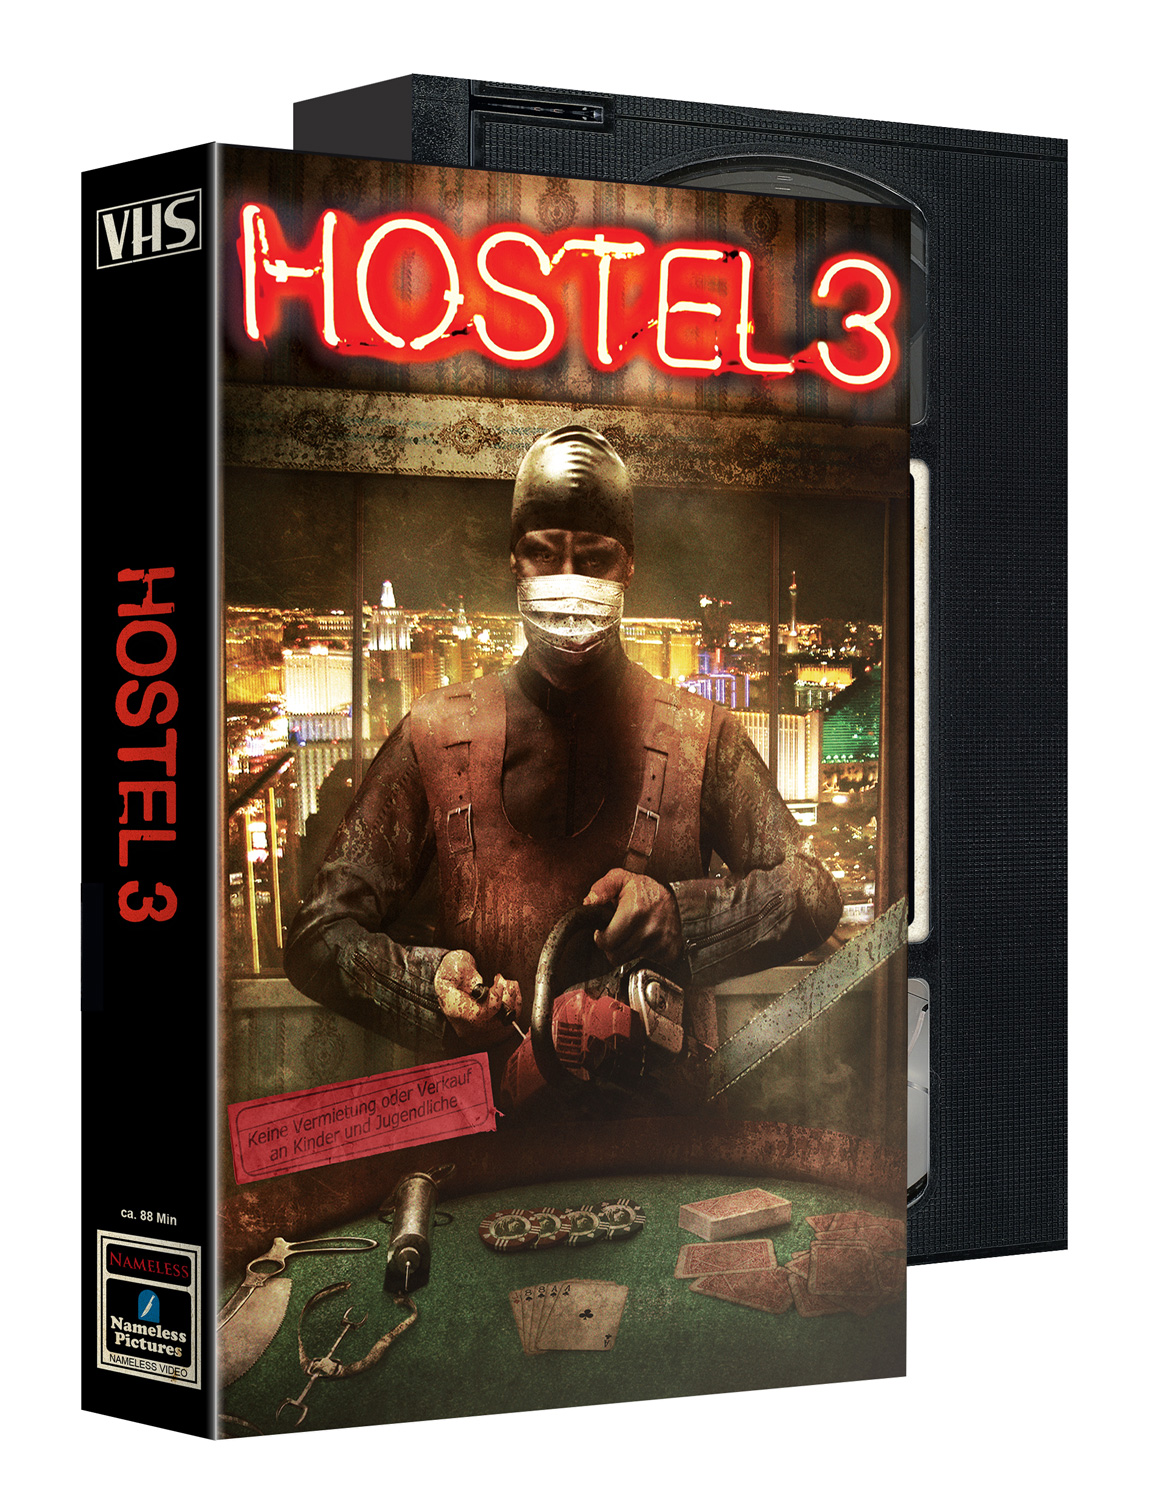 HOSTEL 3 VHS VINTAGE SLIPCASE